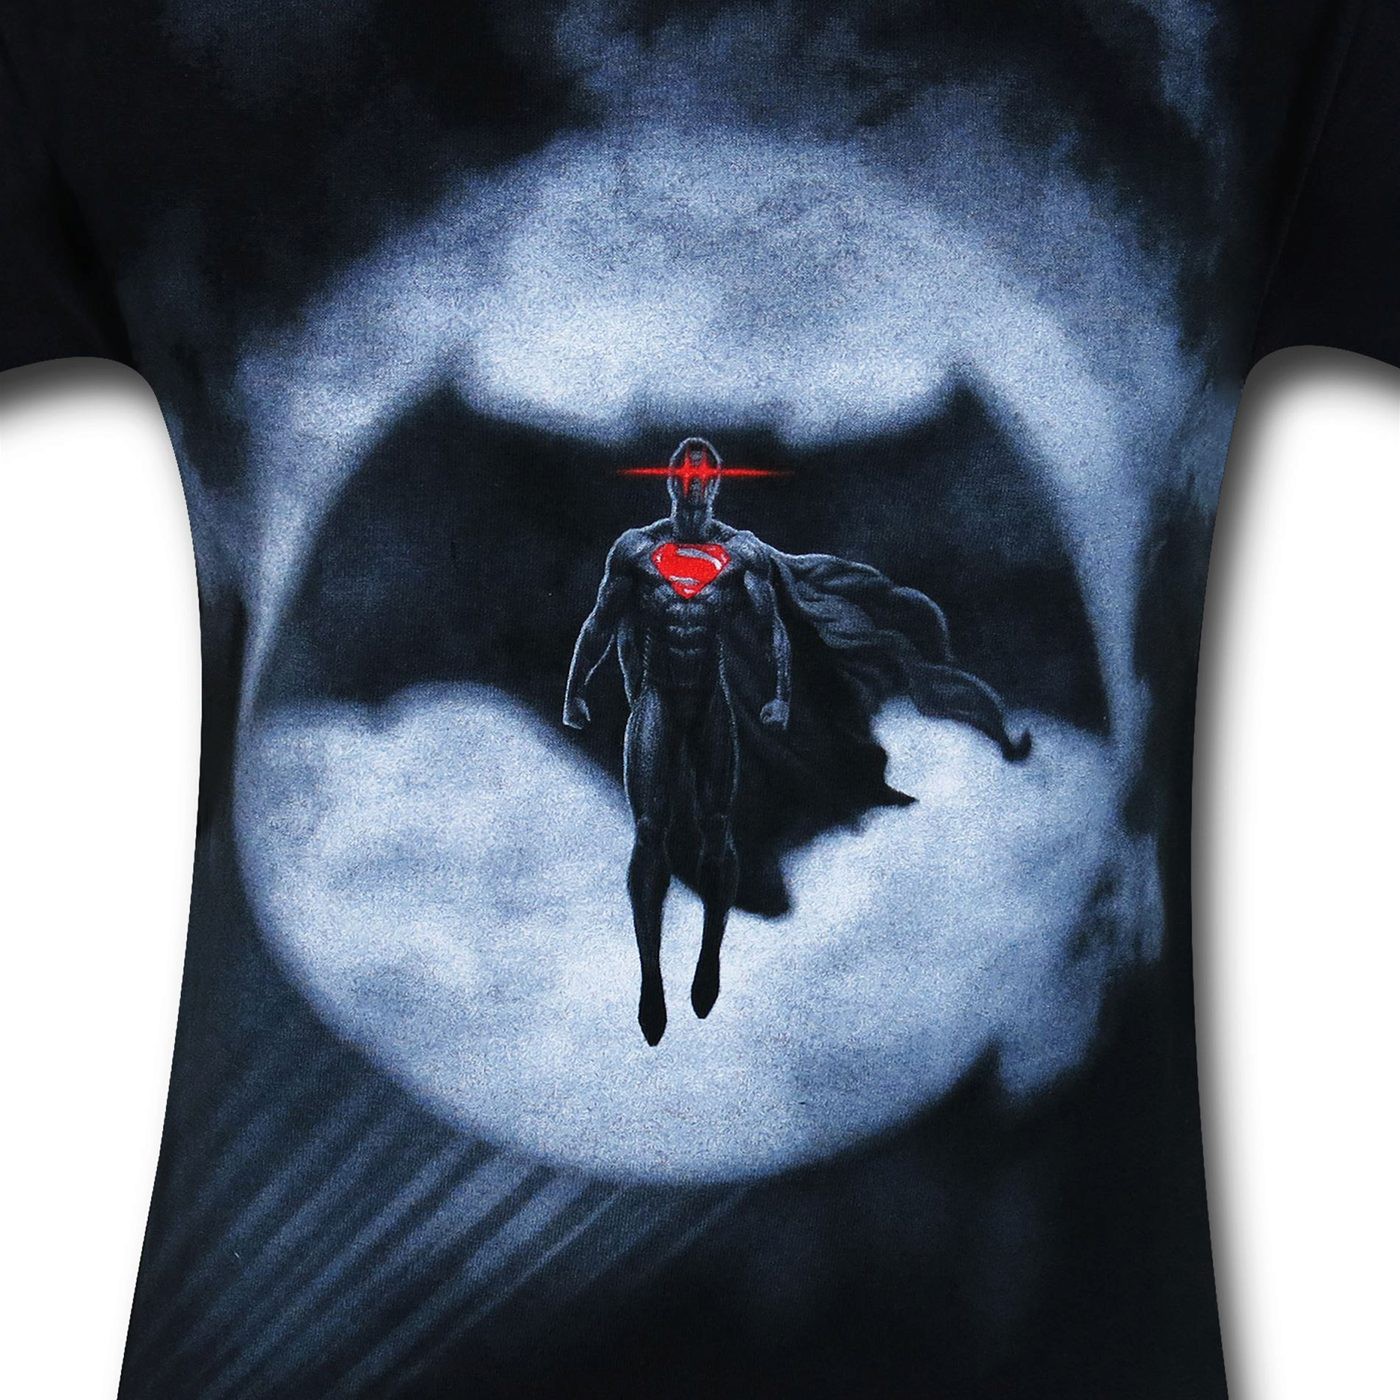 Batman Vs Superman Signal Silhouette T-Shirt